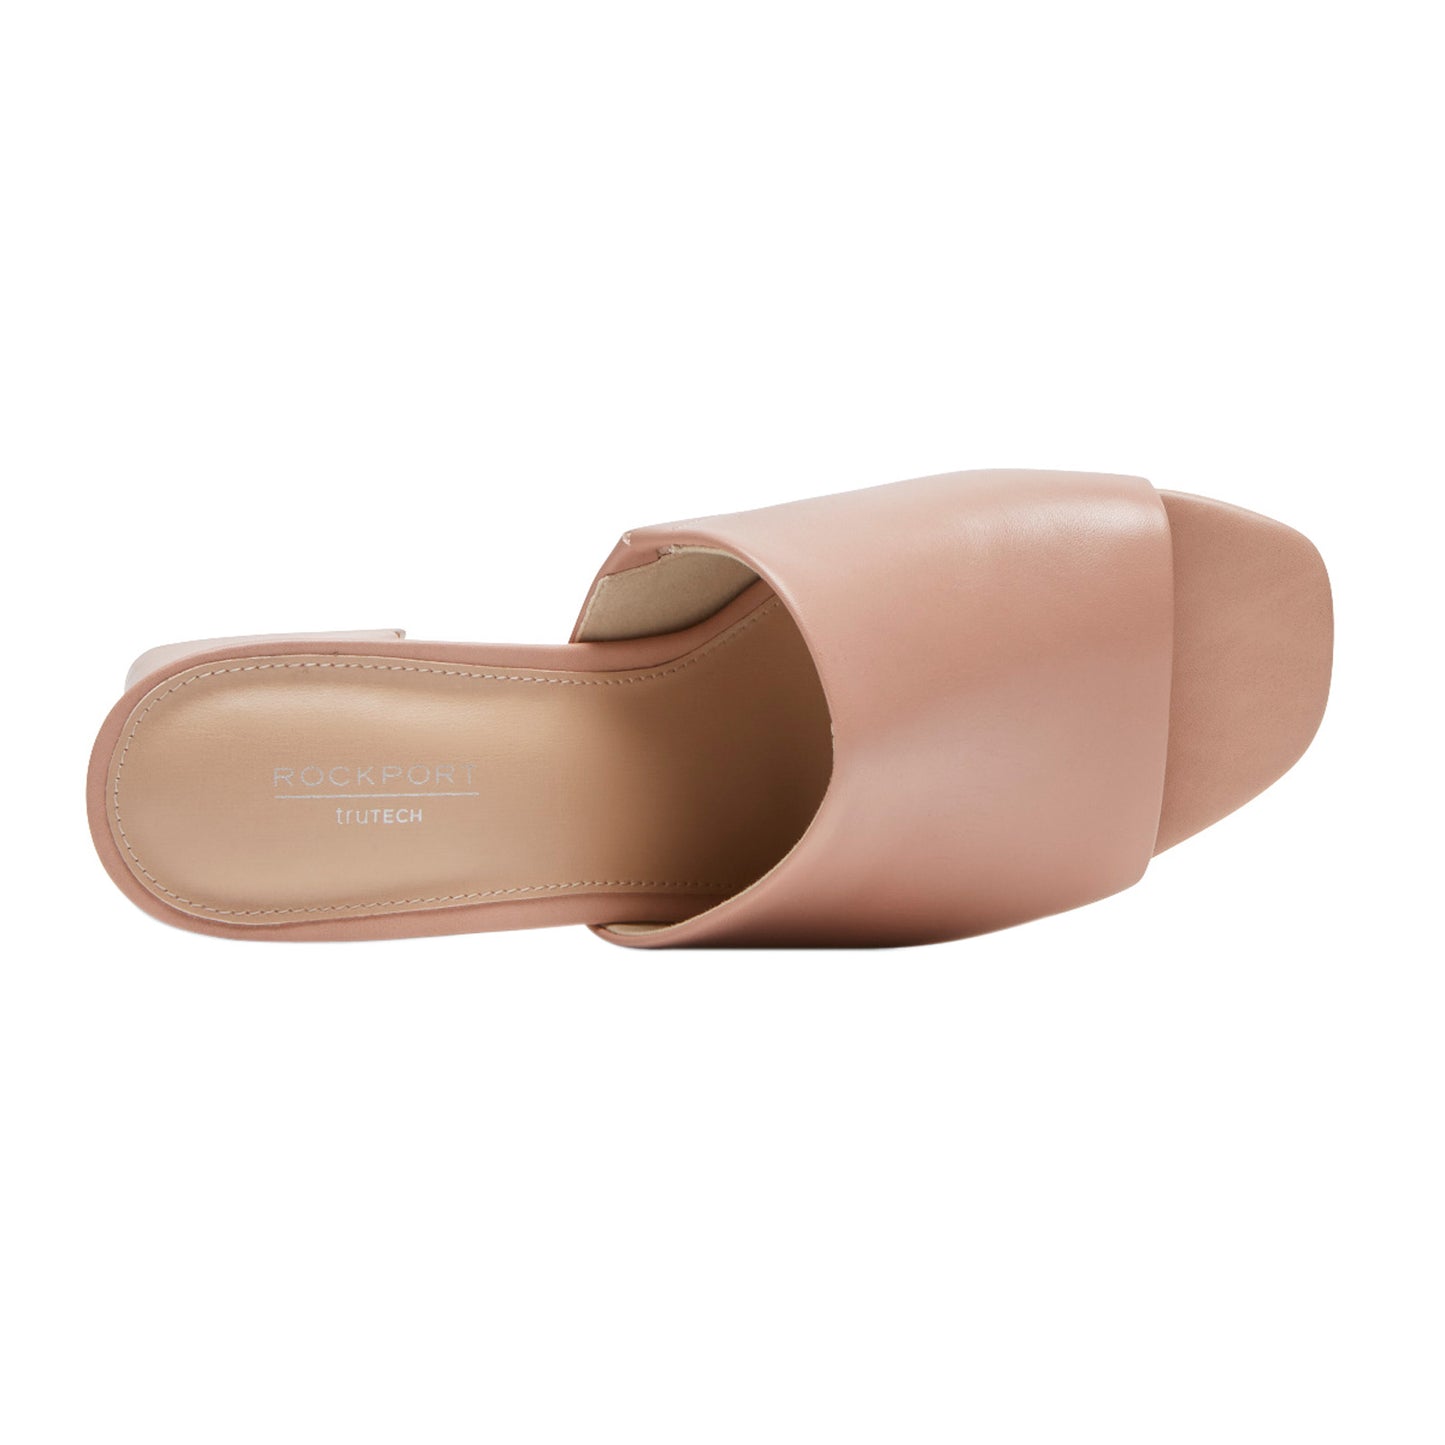 Peltz Shoes  Women's Rockport Farrah Slide Sandal TUSCANY CI9630